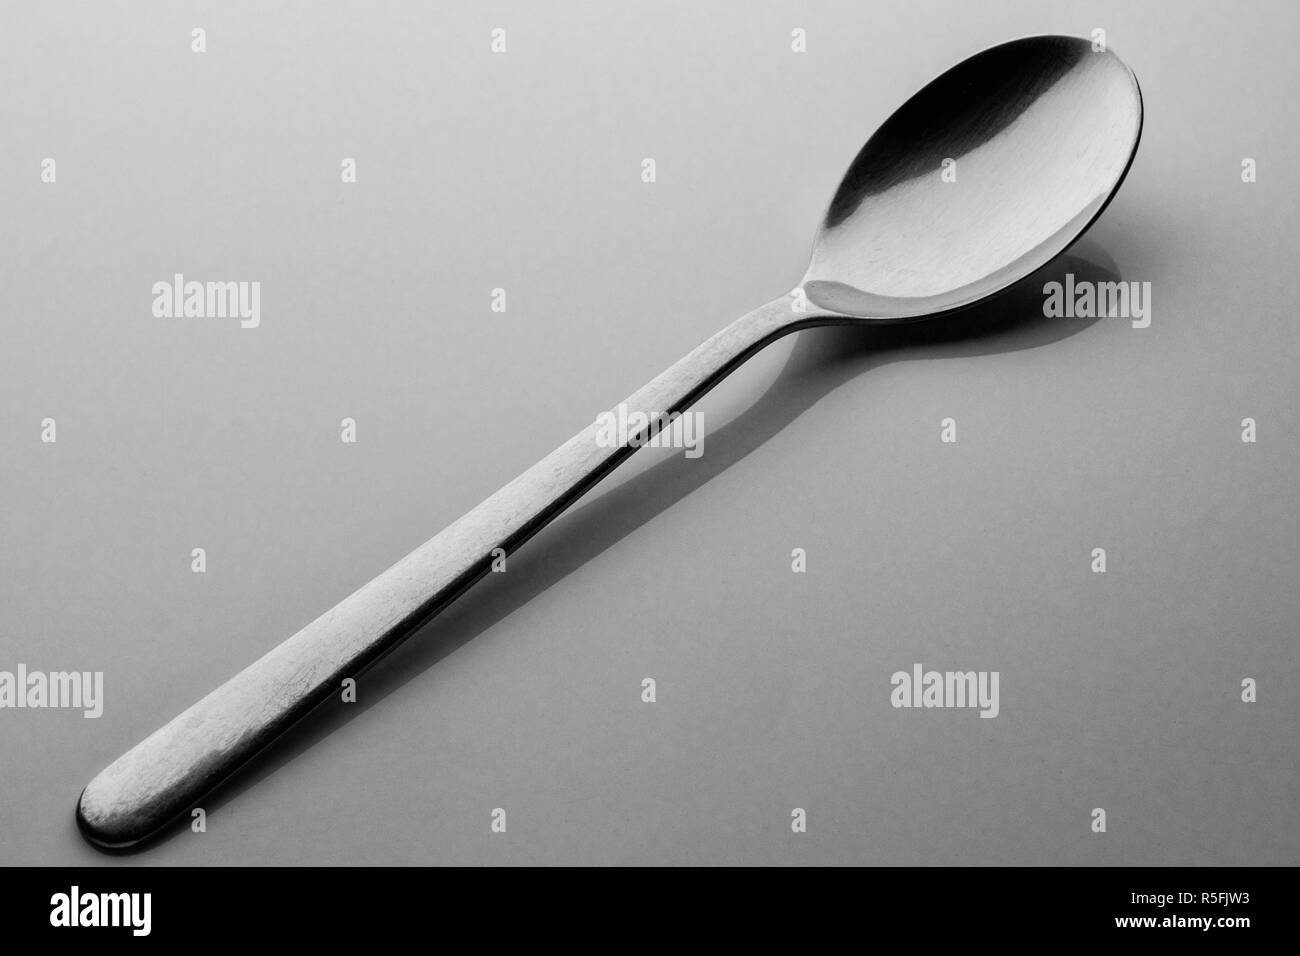 Single silver spoon resting diagonally on a table Stock Photo